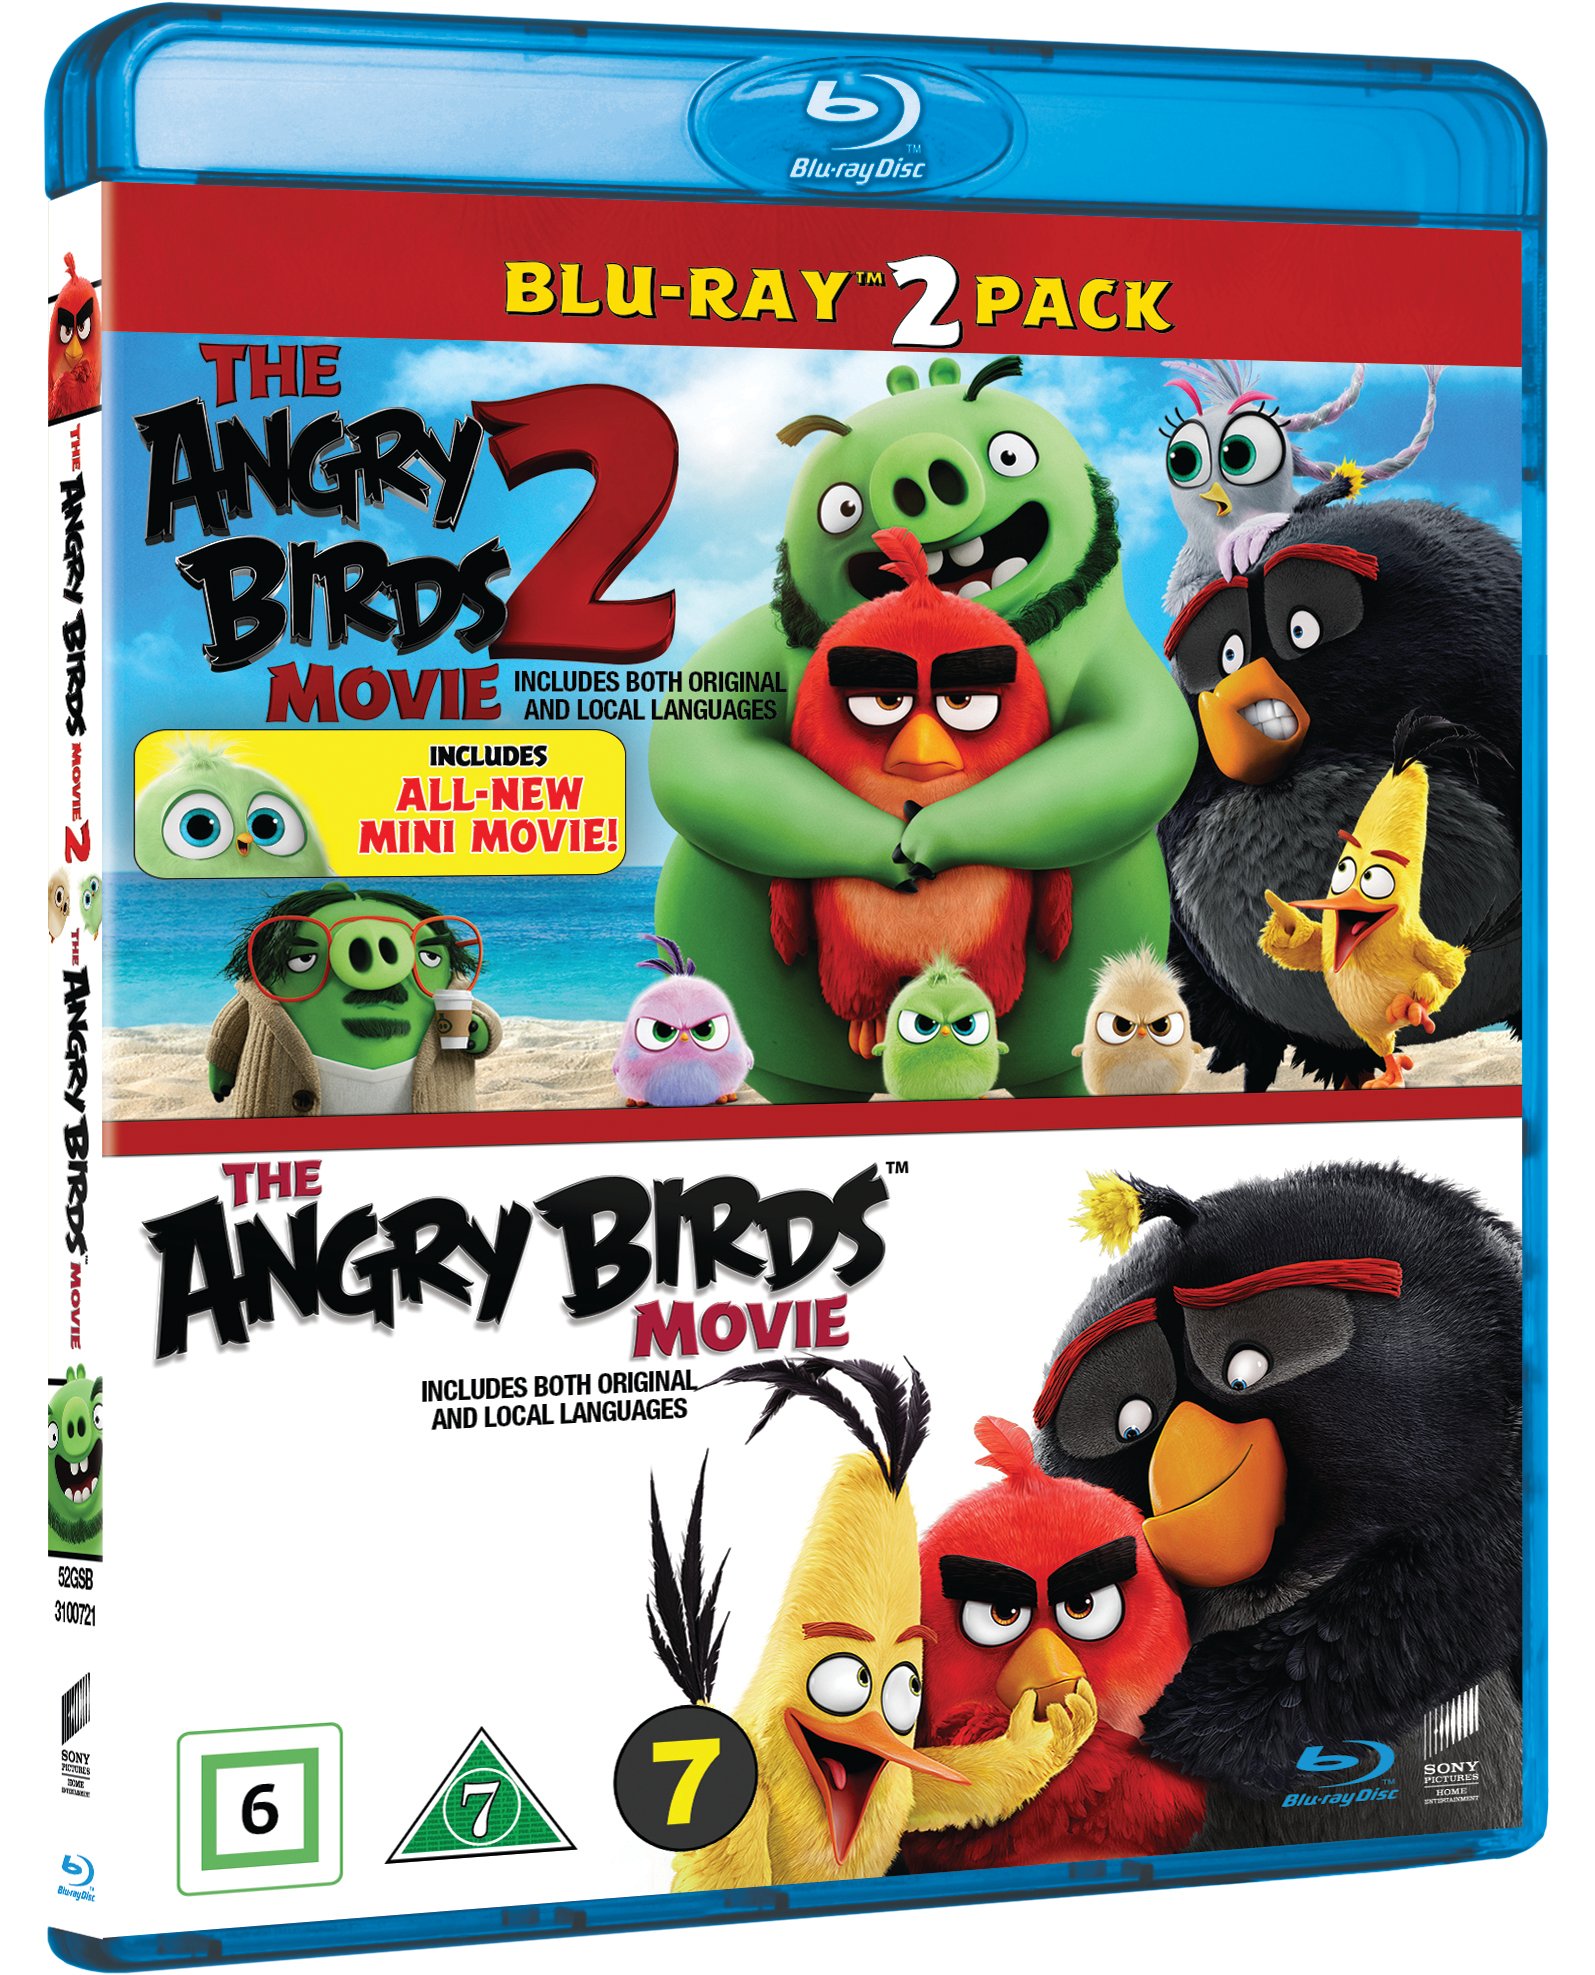 angry birds 2 soundtrack